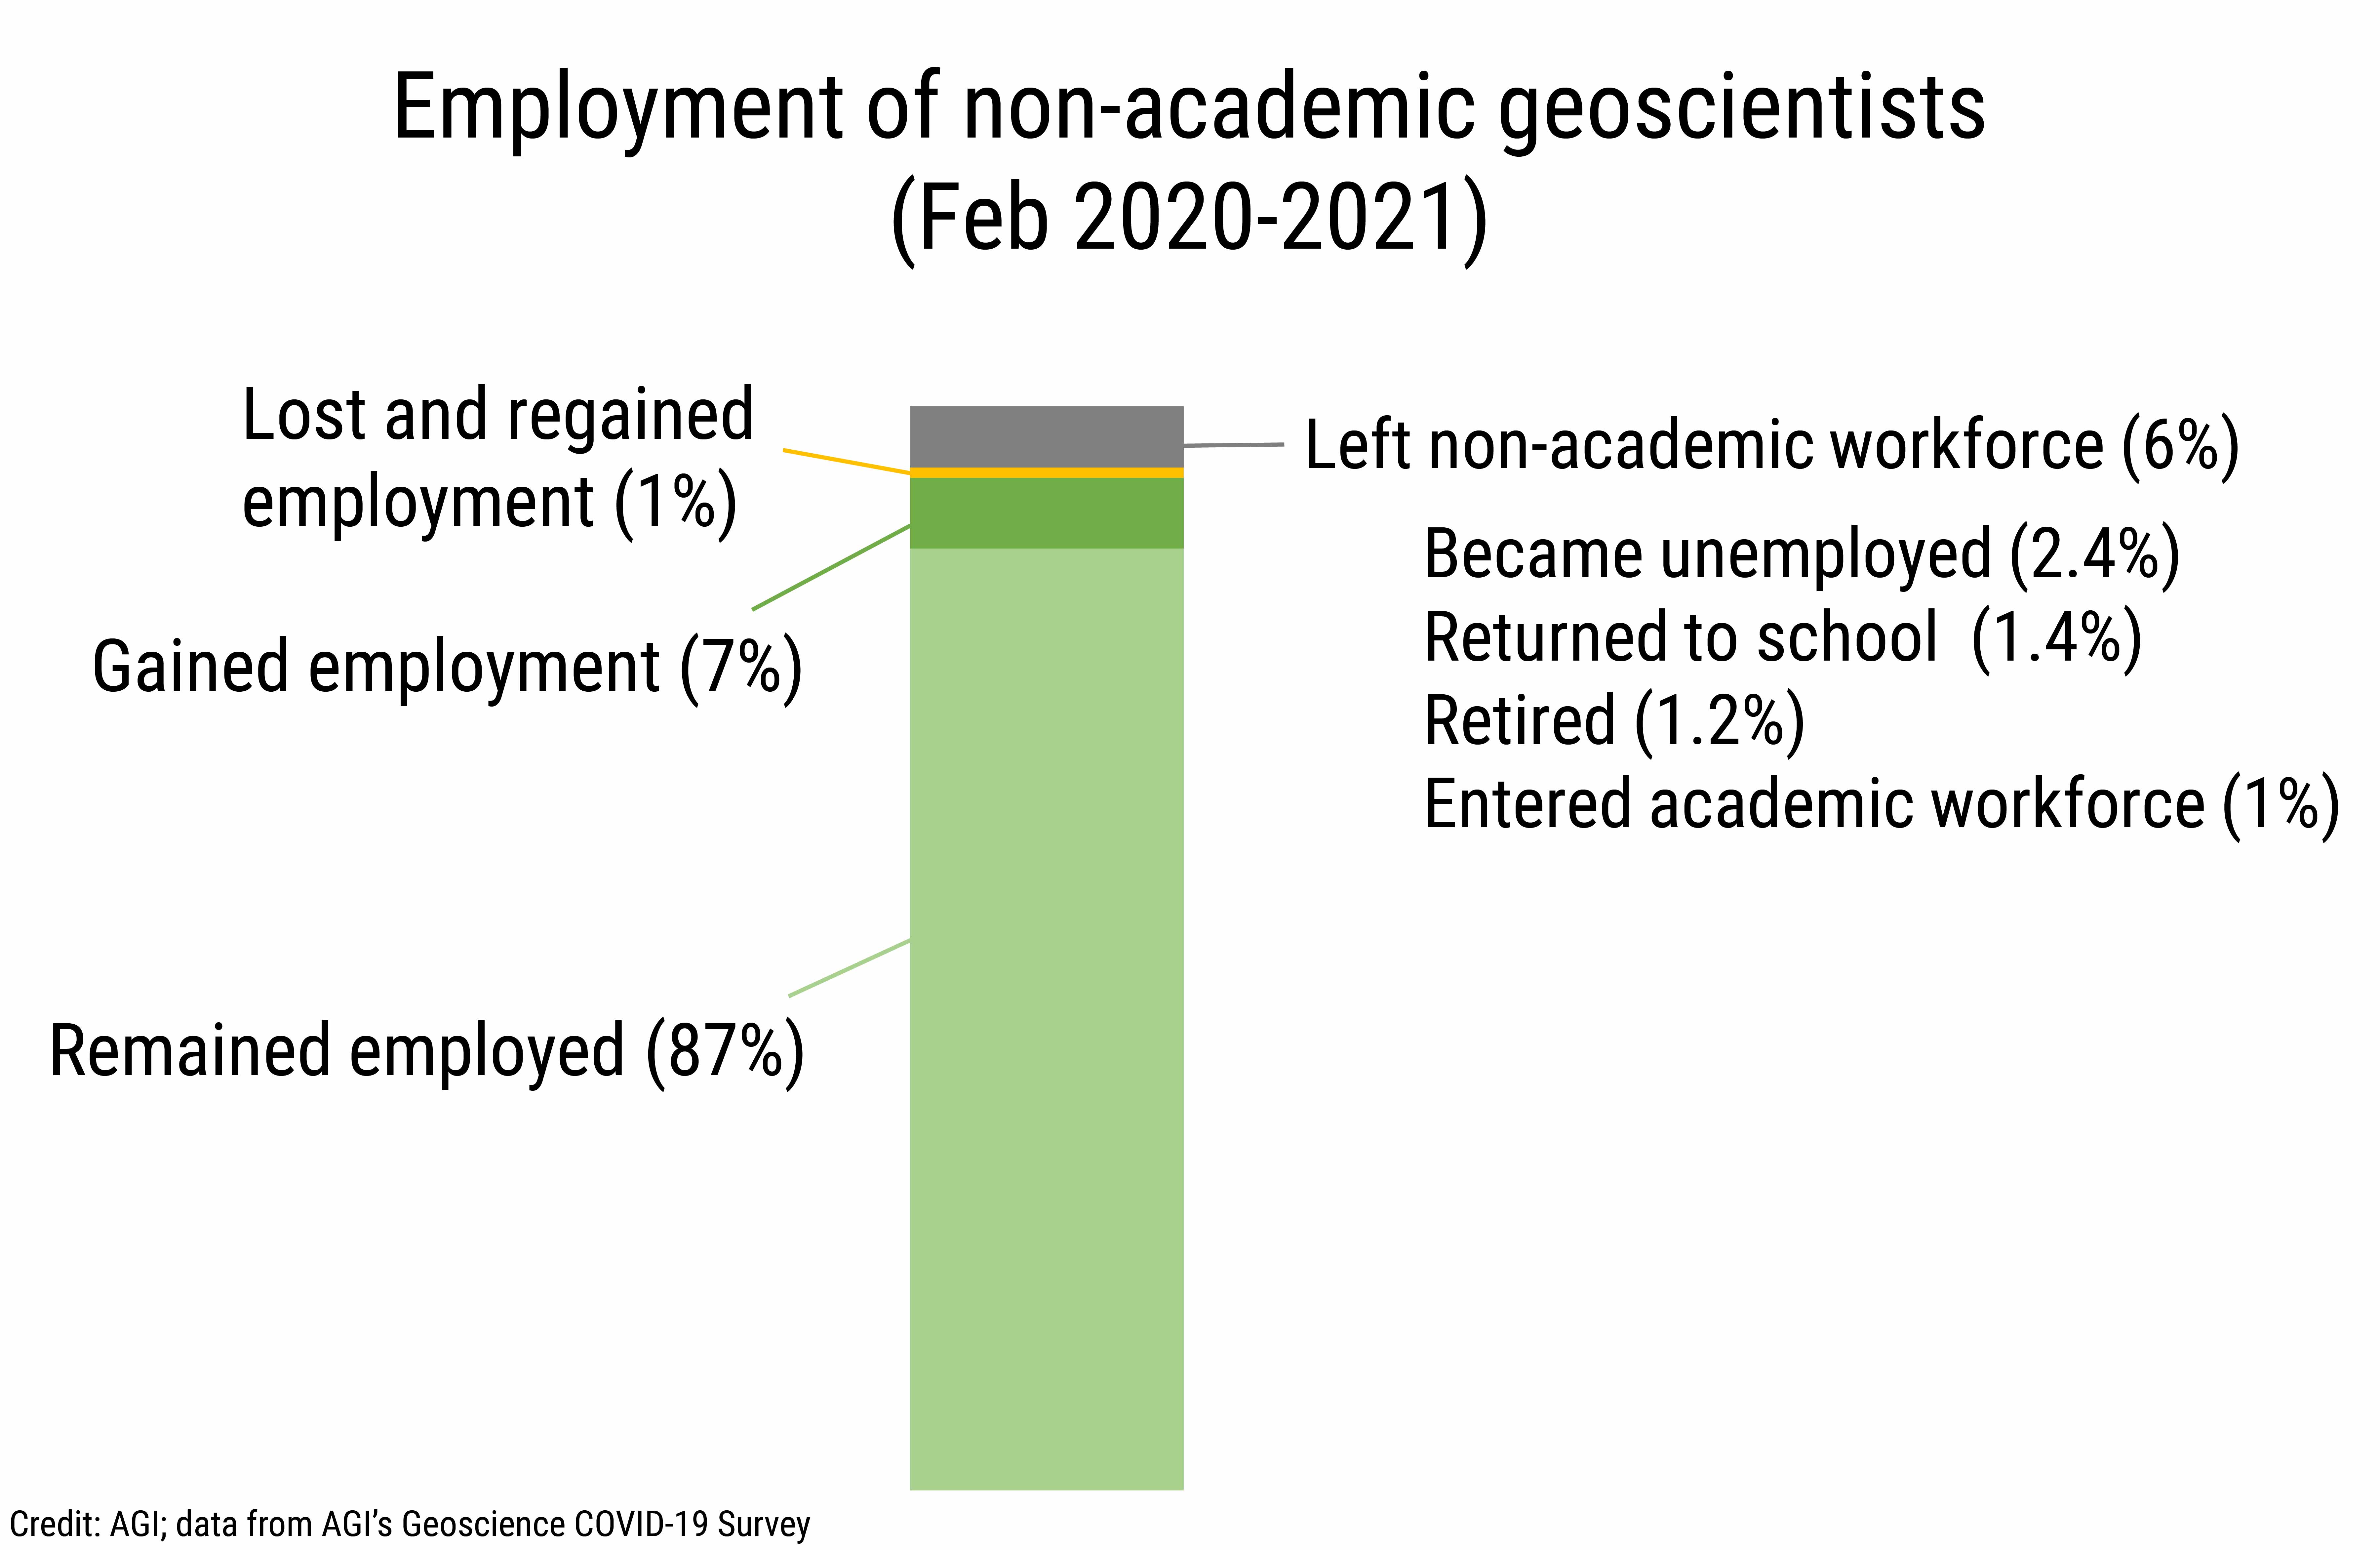 DB_2021-006 chart 01: Employment of non-academic geoscientists (Feb 2020-2021) (Credit: AGI; data from AGI's Geoscience COVID-19 Survey)